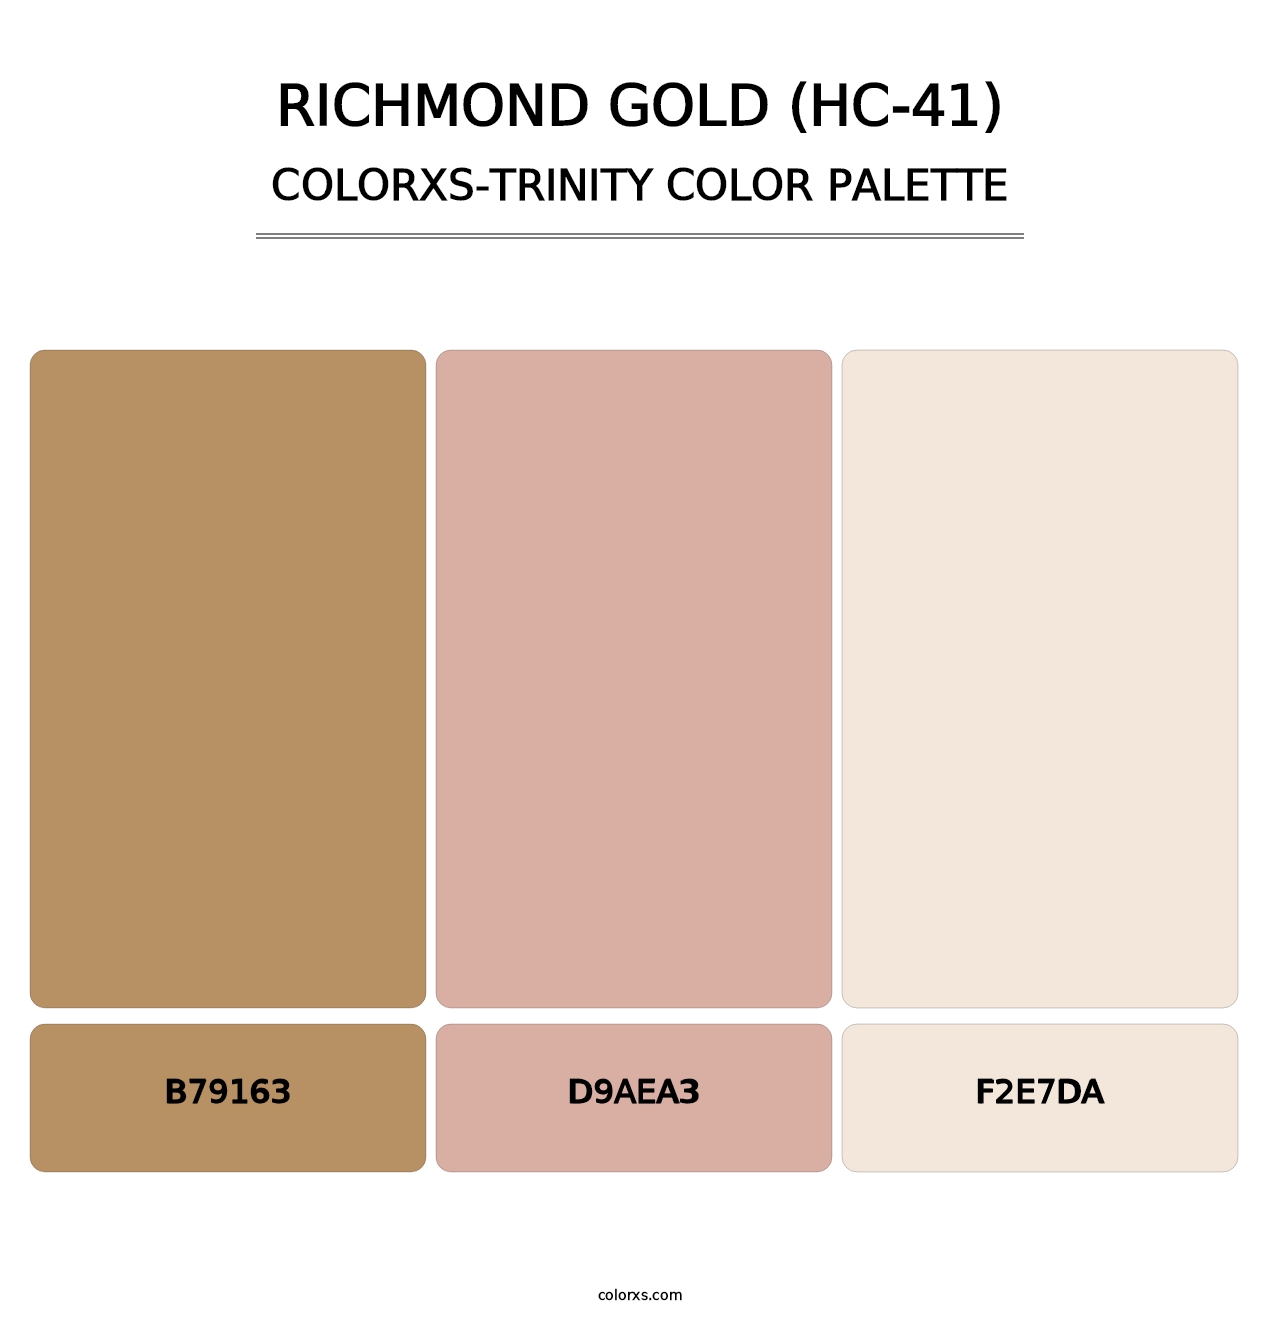 Richmond Gold (HC-41) - Colorxs Trinity Palette